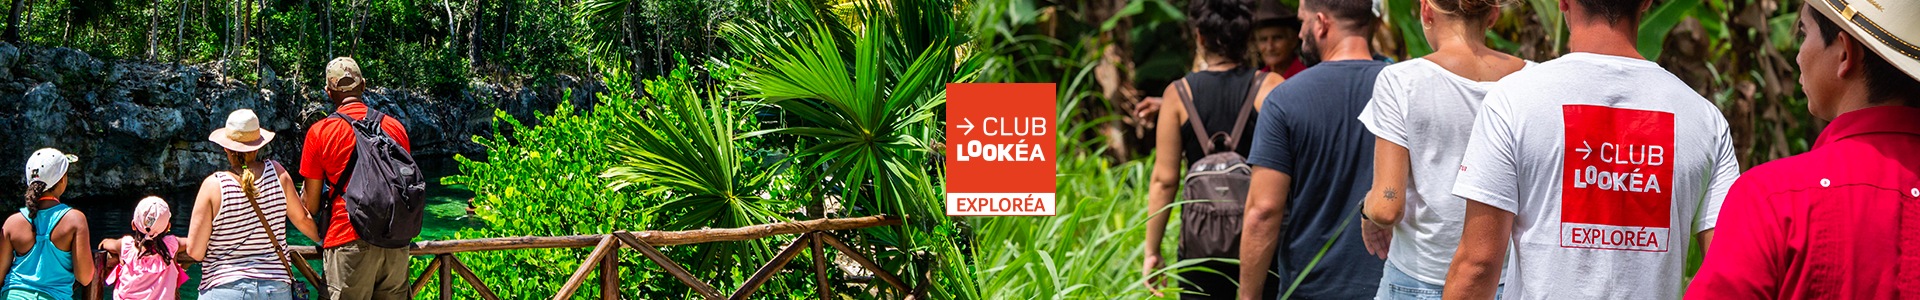 Club Lookéa Exploréa